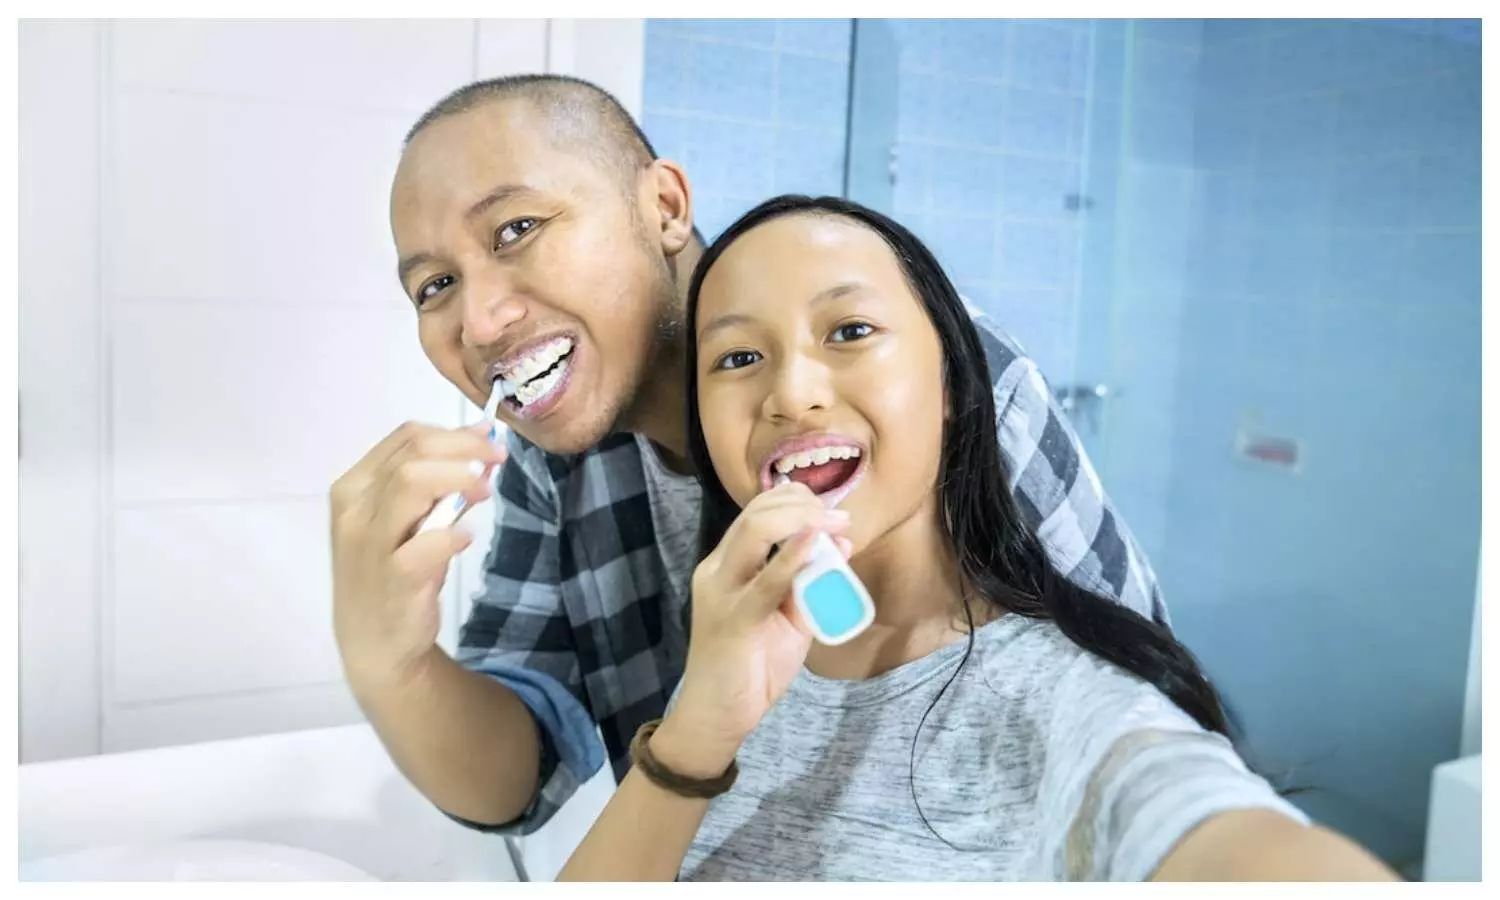 Dental Hygiene Month